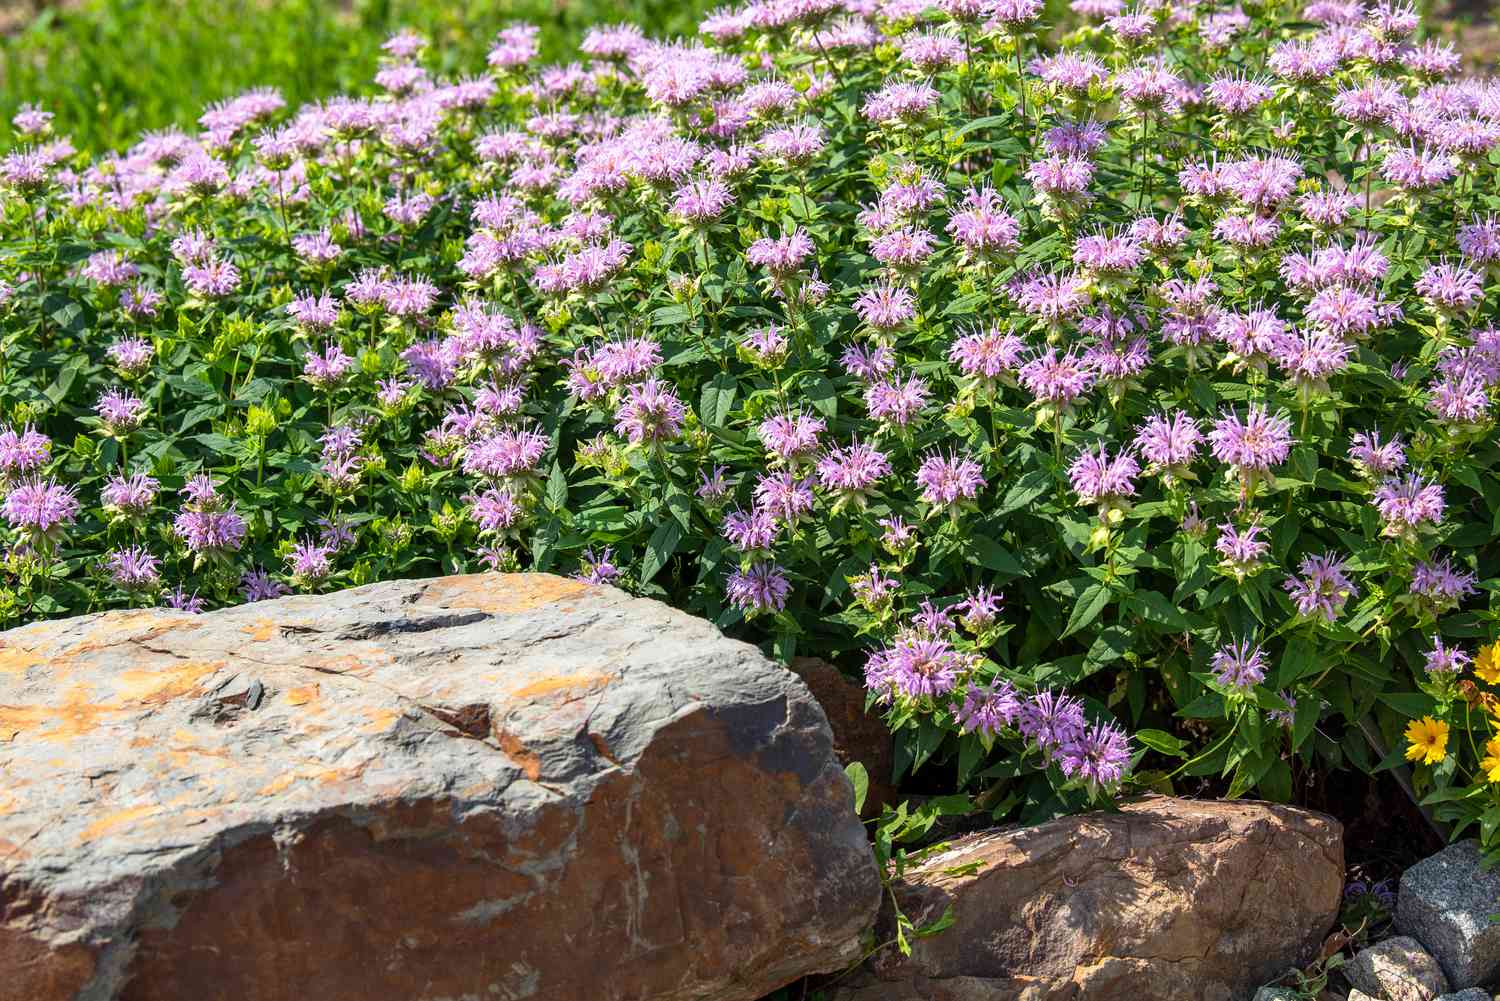 Bee balm flowers with light purple flower heads clustered near boulder in sunlight